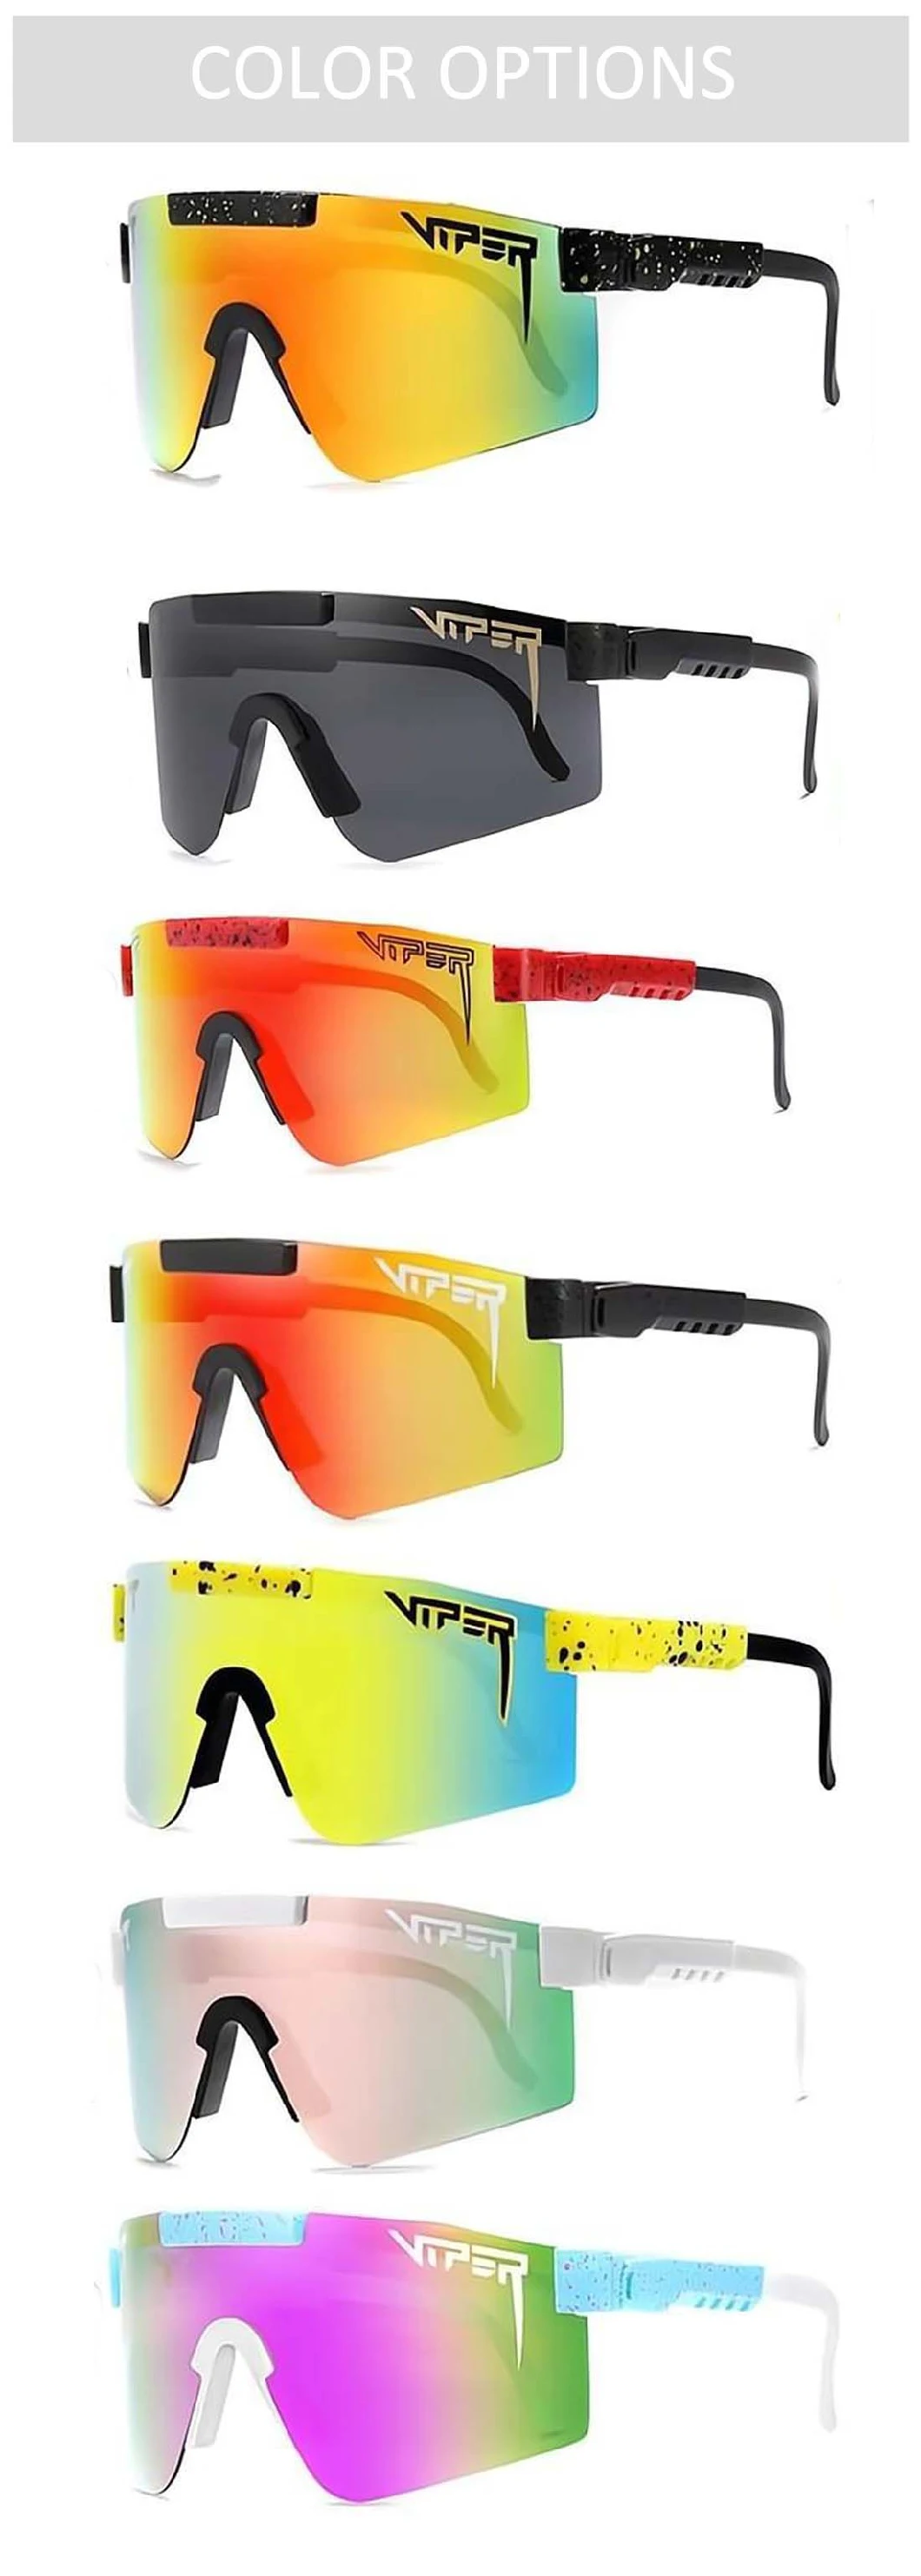 Gd Polarized Sports Sunglasses Cycling Sun Glasses for Men Women for Running Baseball Golf Driving